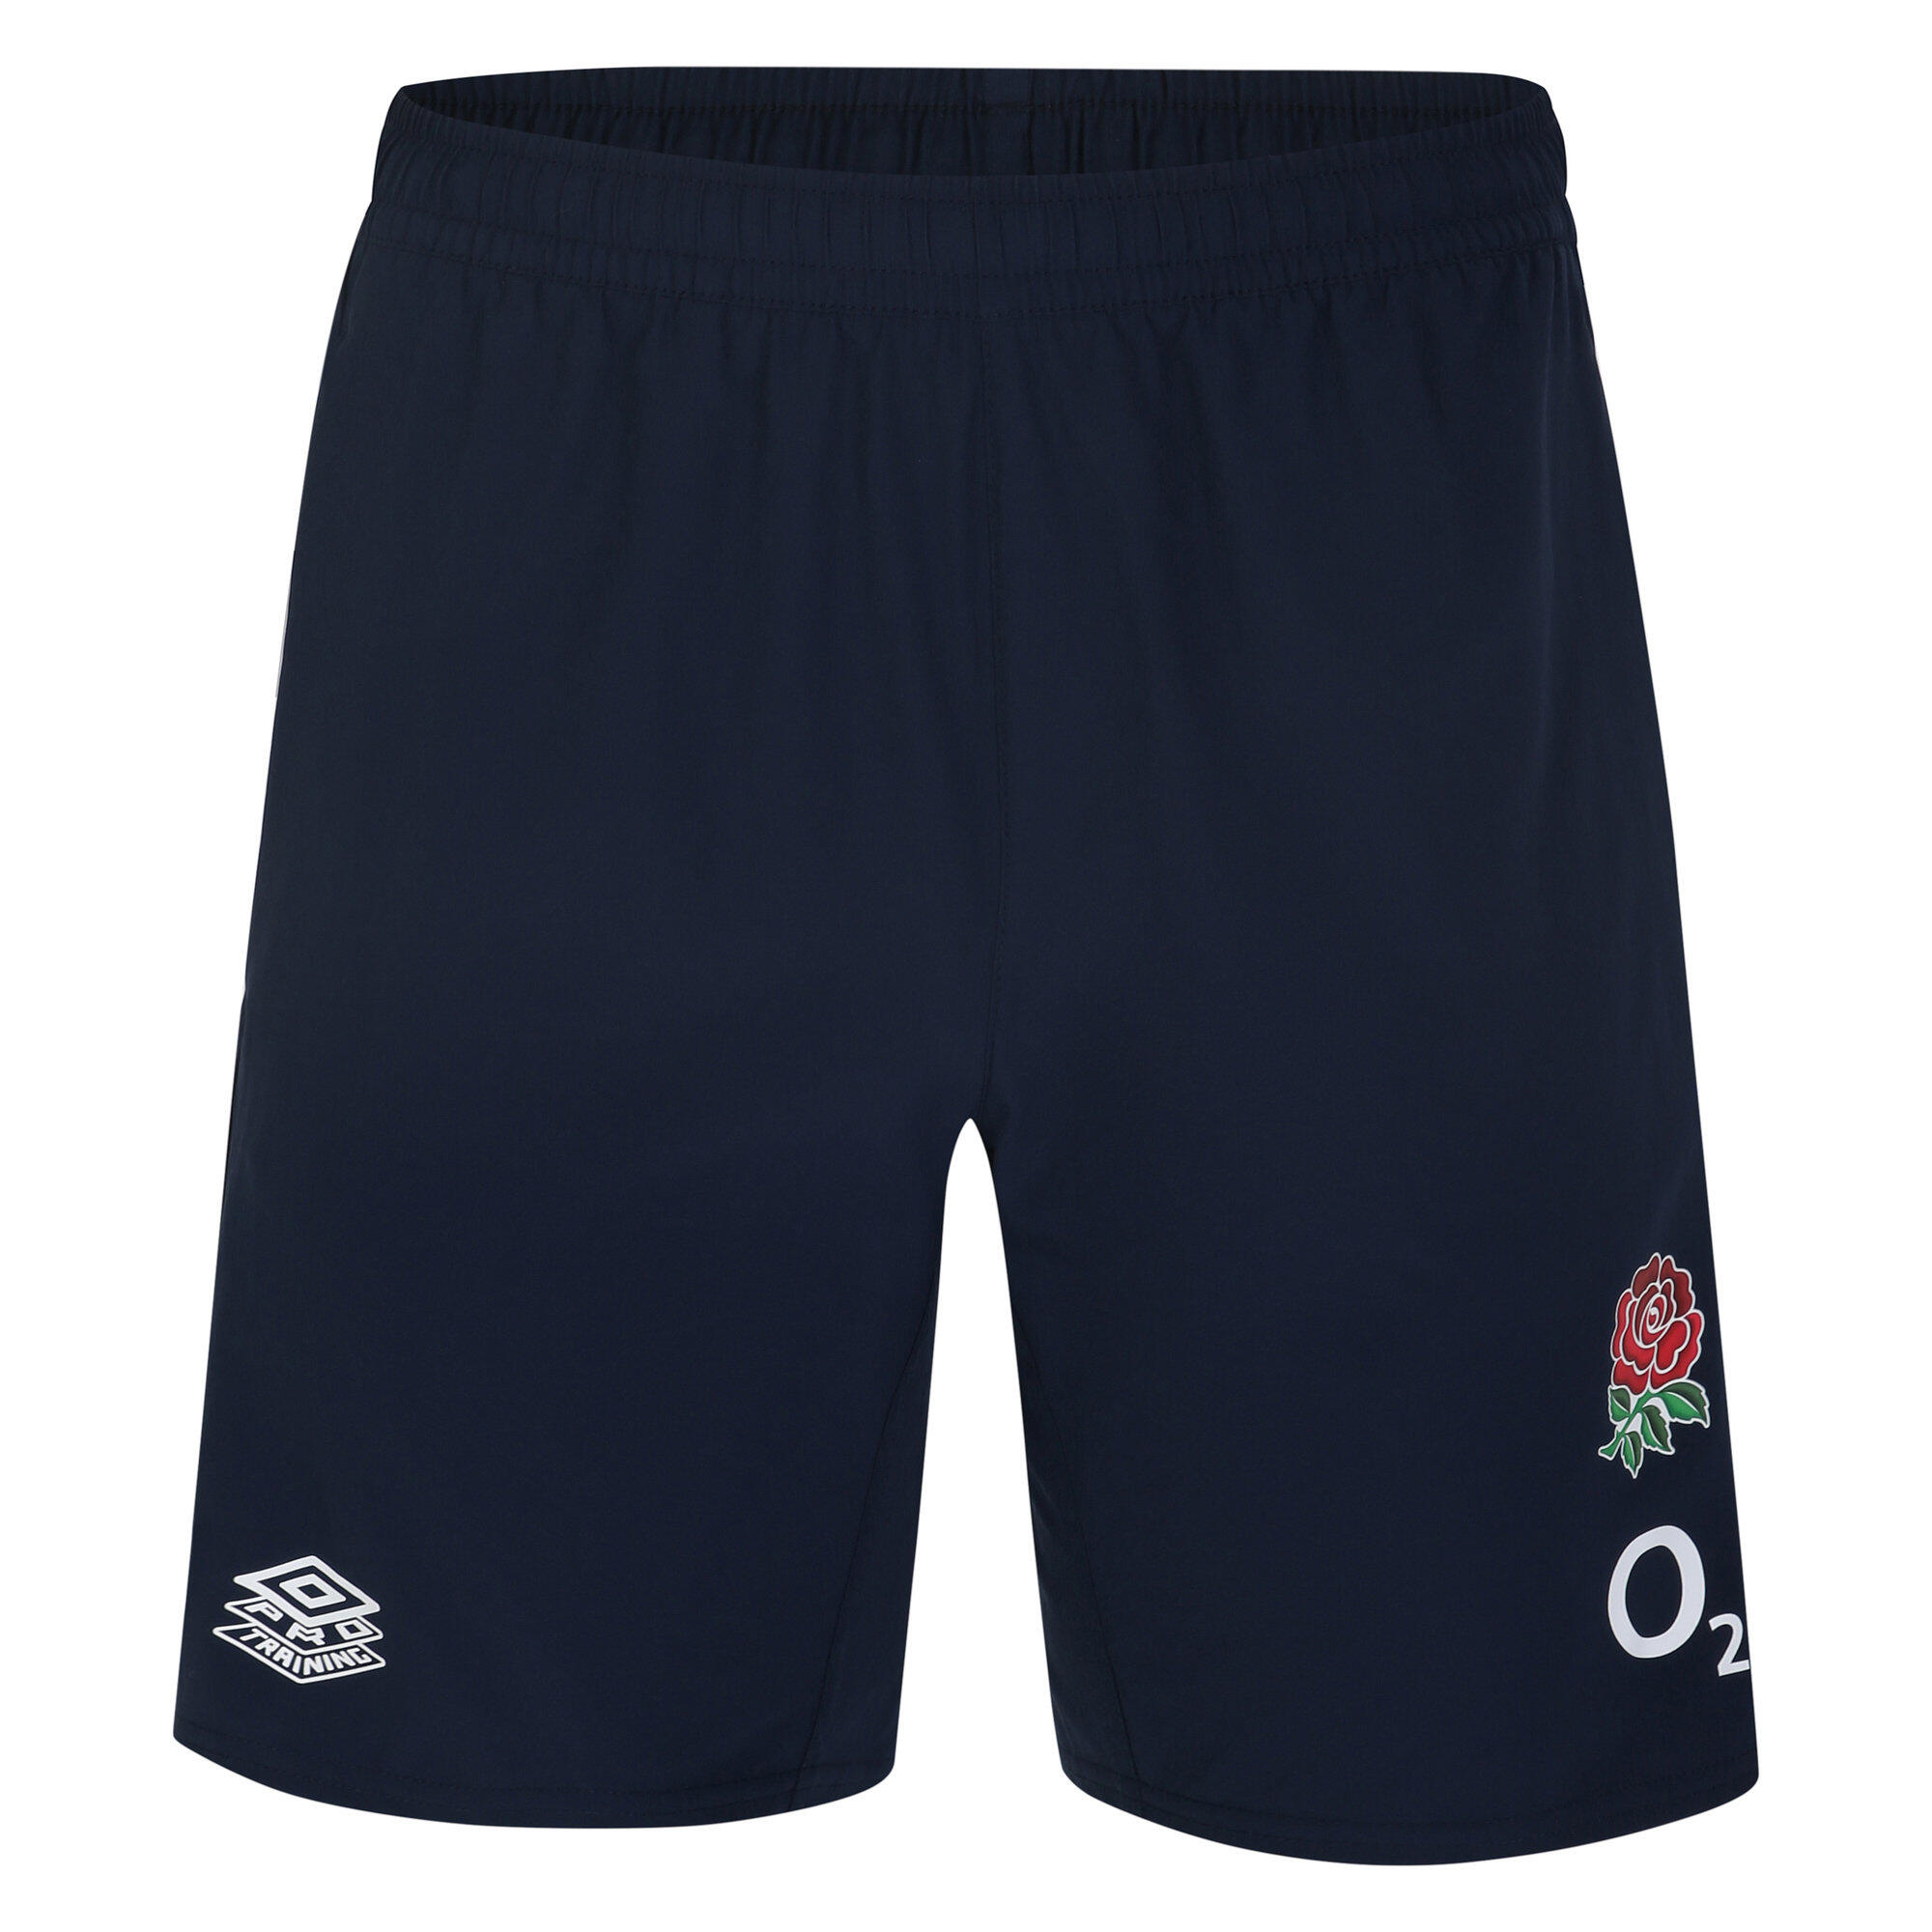 UMBRO Mens 23/24 England Rugby Gym Shorts (Navy Blazer)